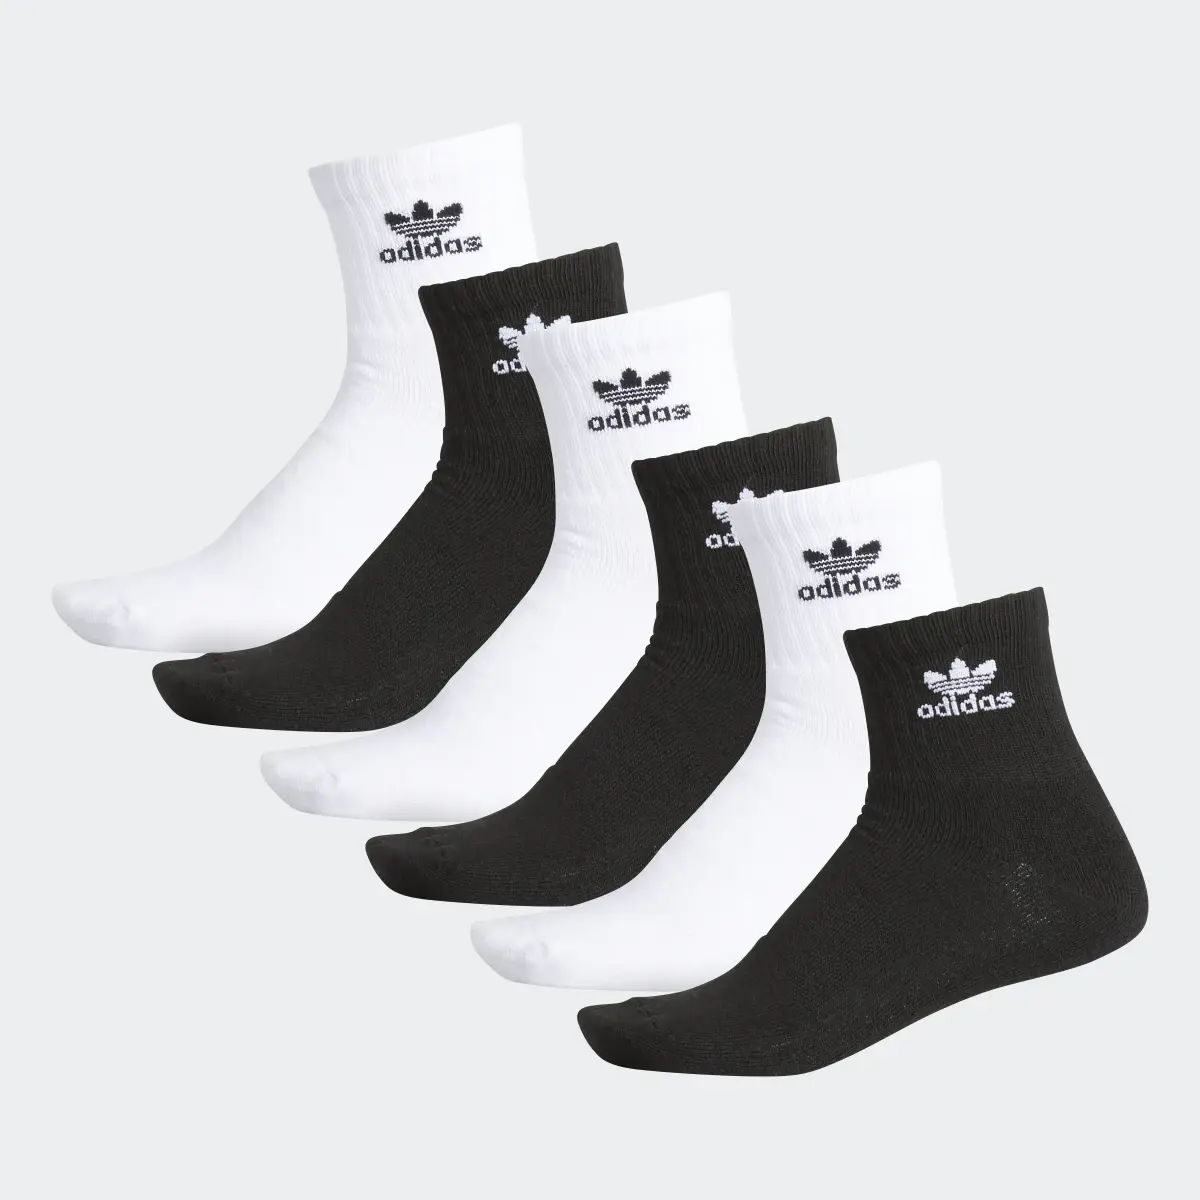 Adidas Trefoil Quarter Socks 3 Pairs. 2